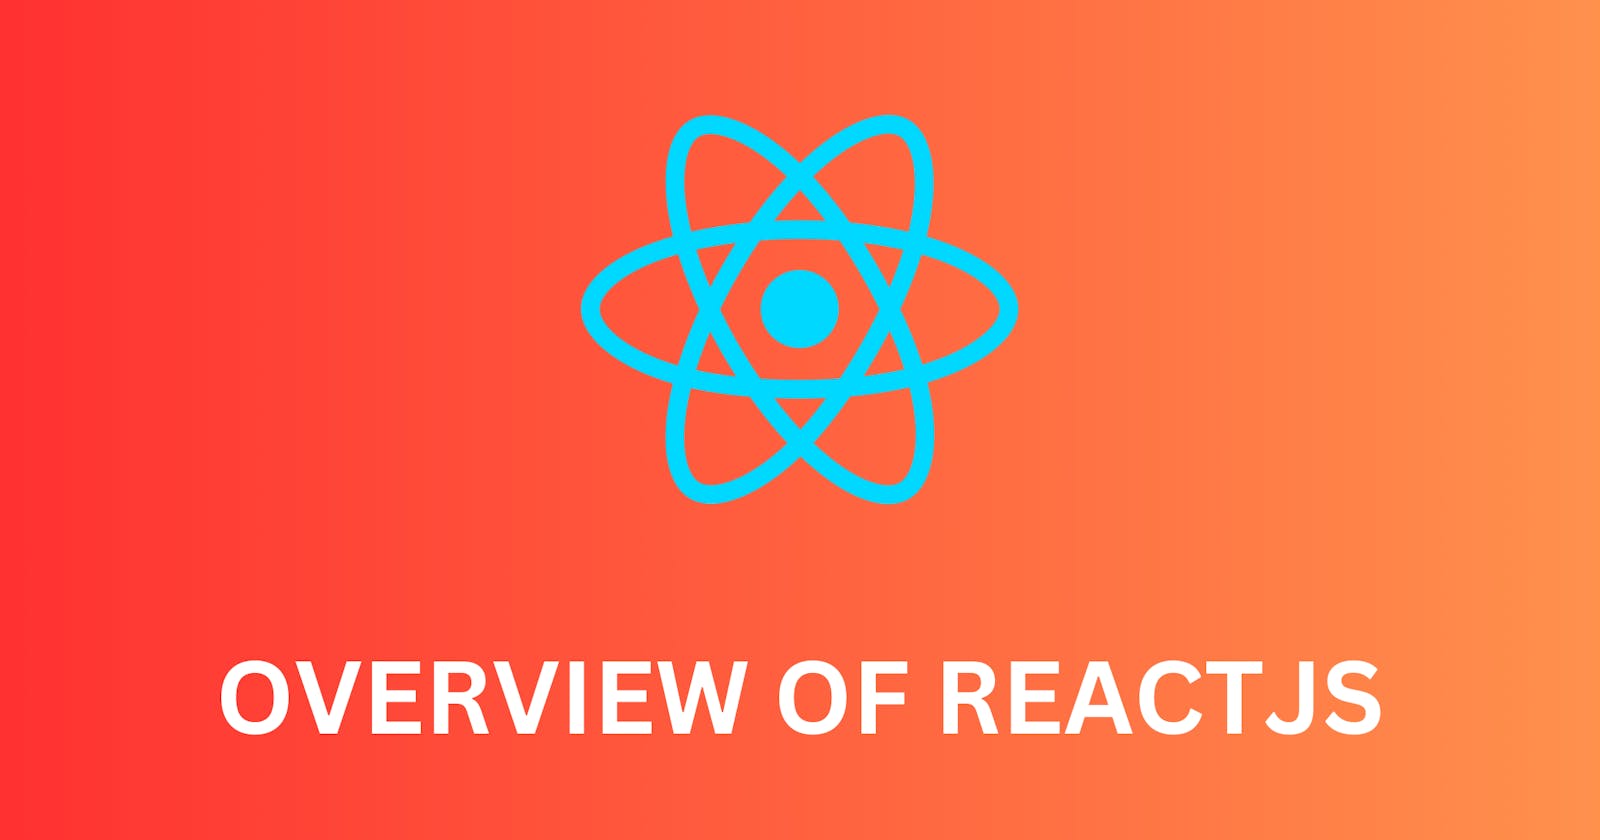 Overview of ReactJs